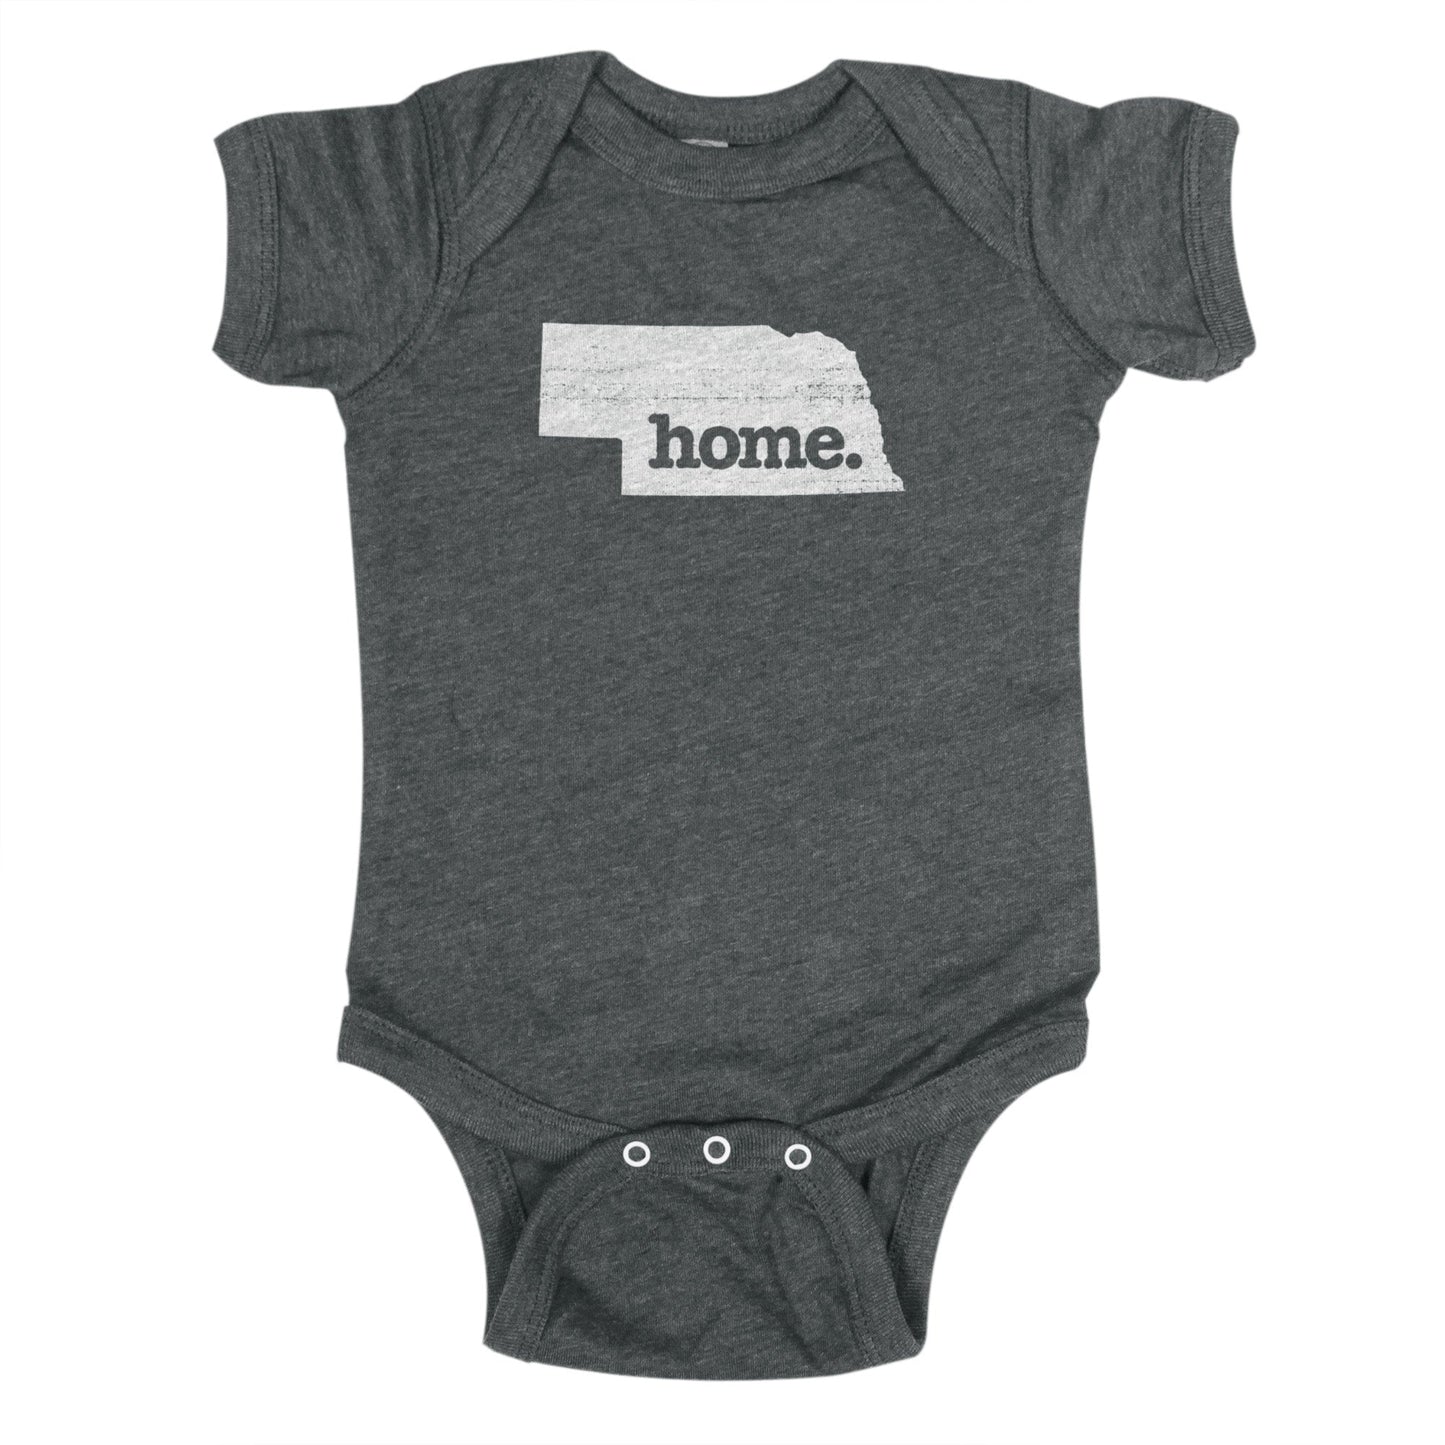 home. Baby Bodysuit - Nebraska